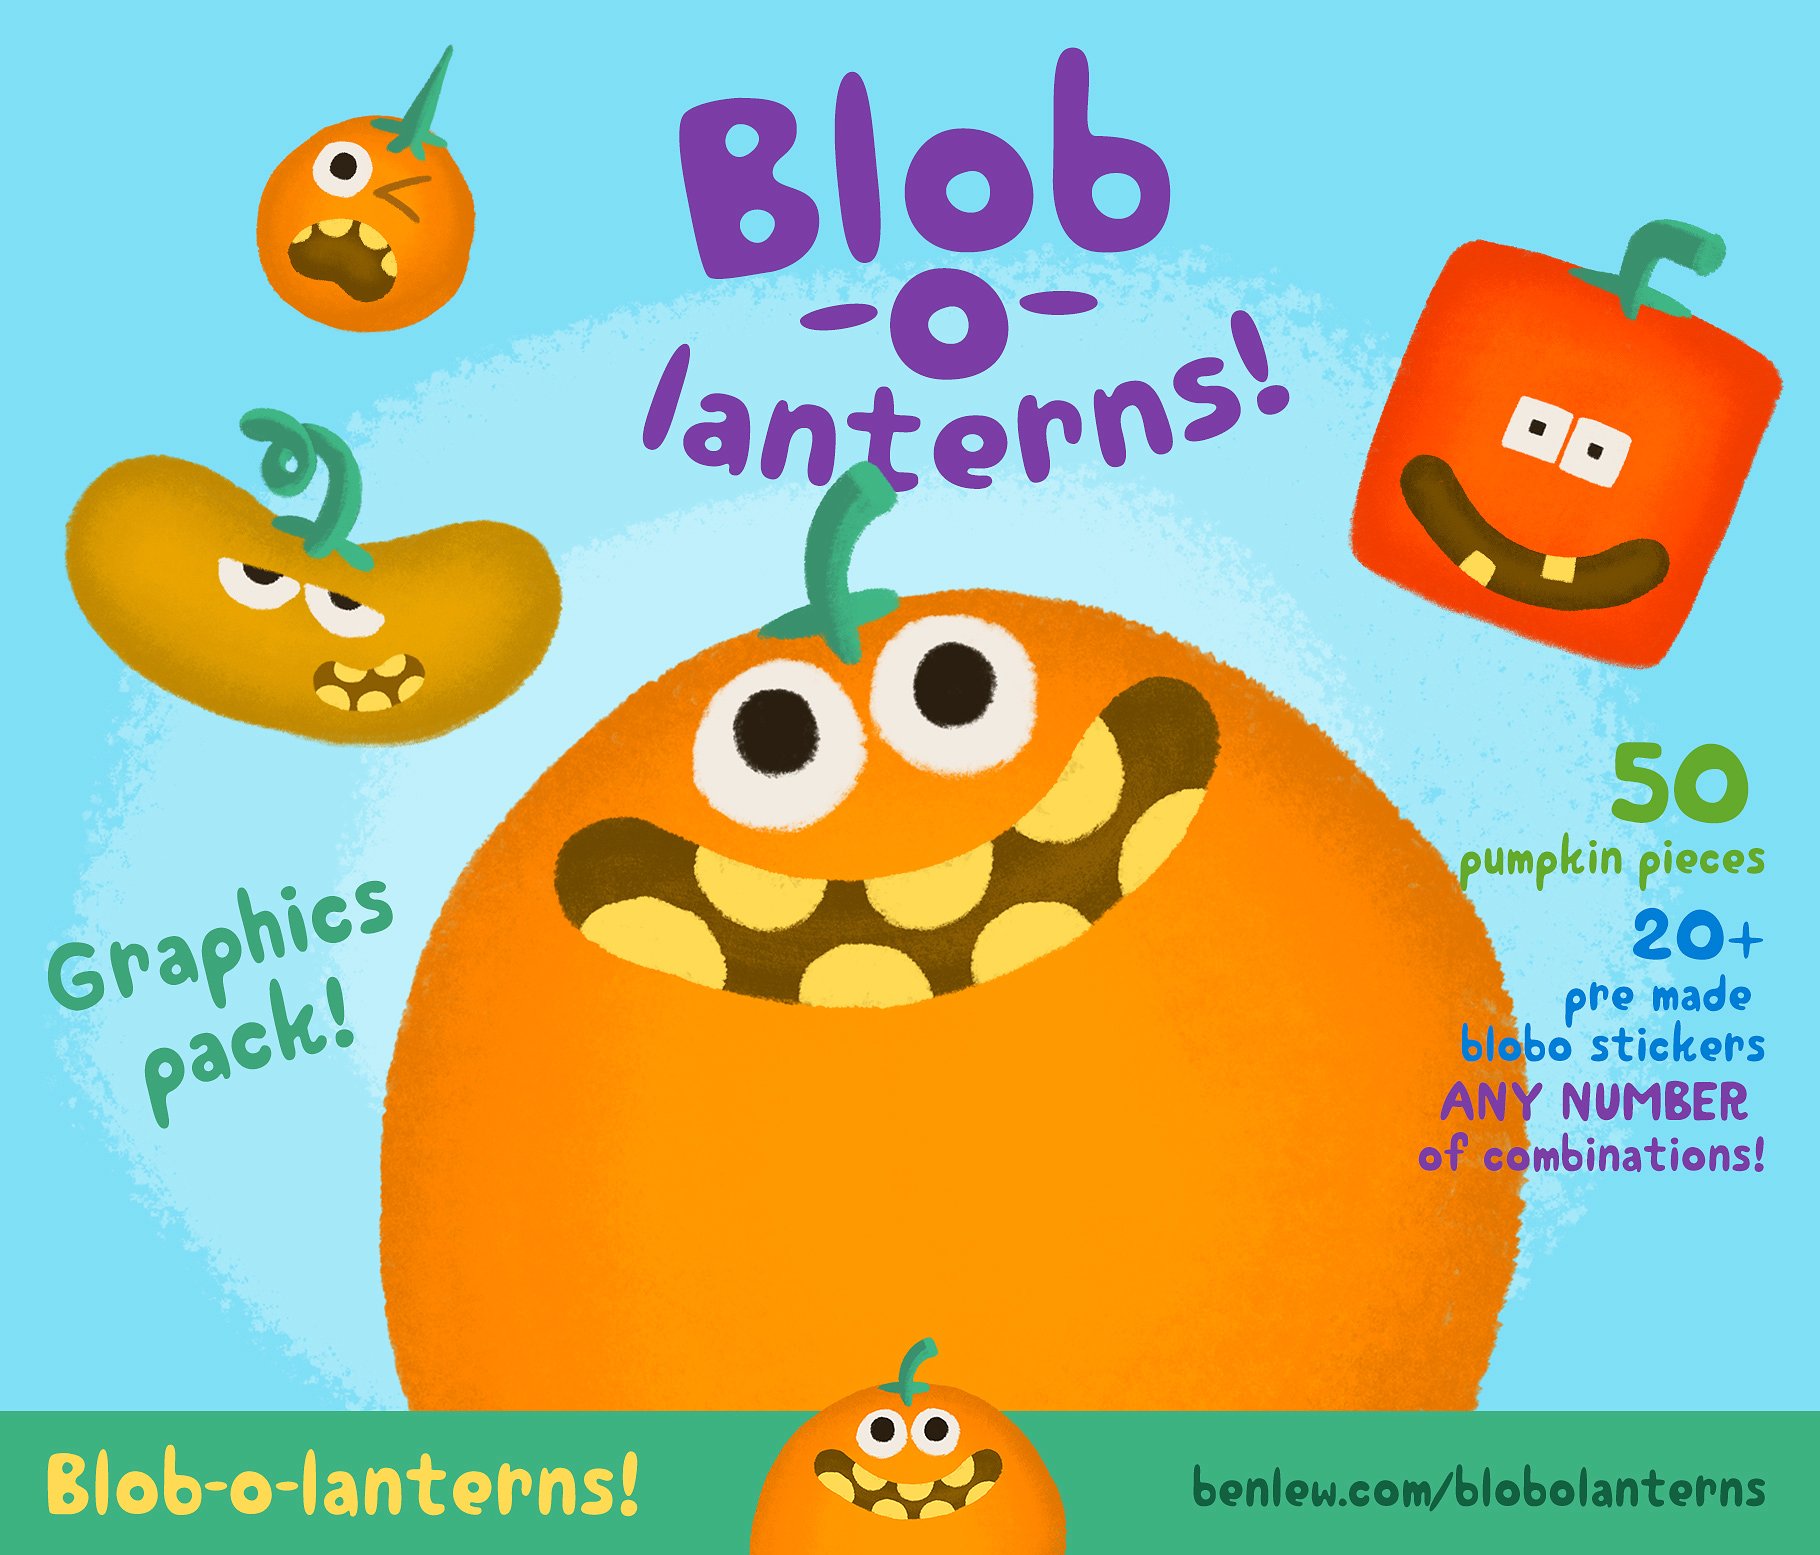 万圣节搞怪南瓜插画 Blob-o-lanterns Graphic Pack插图